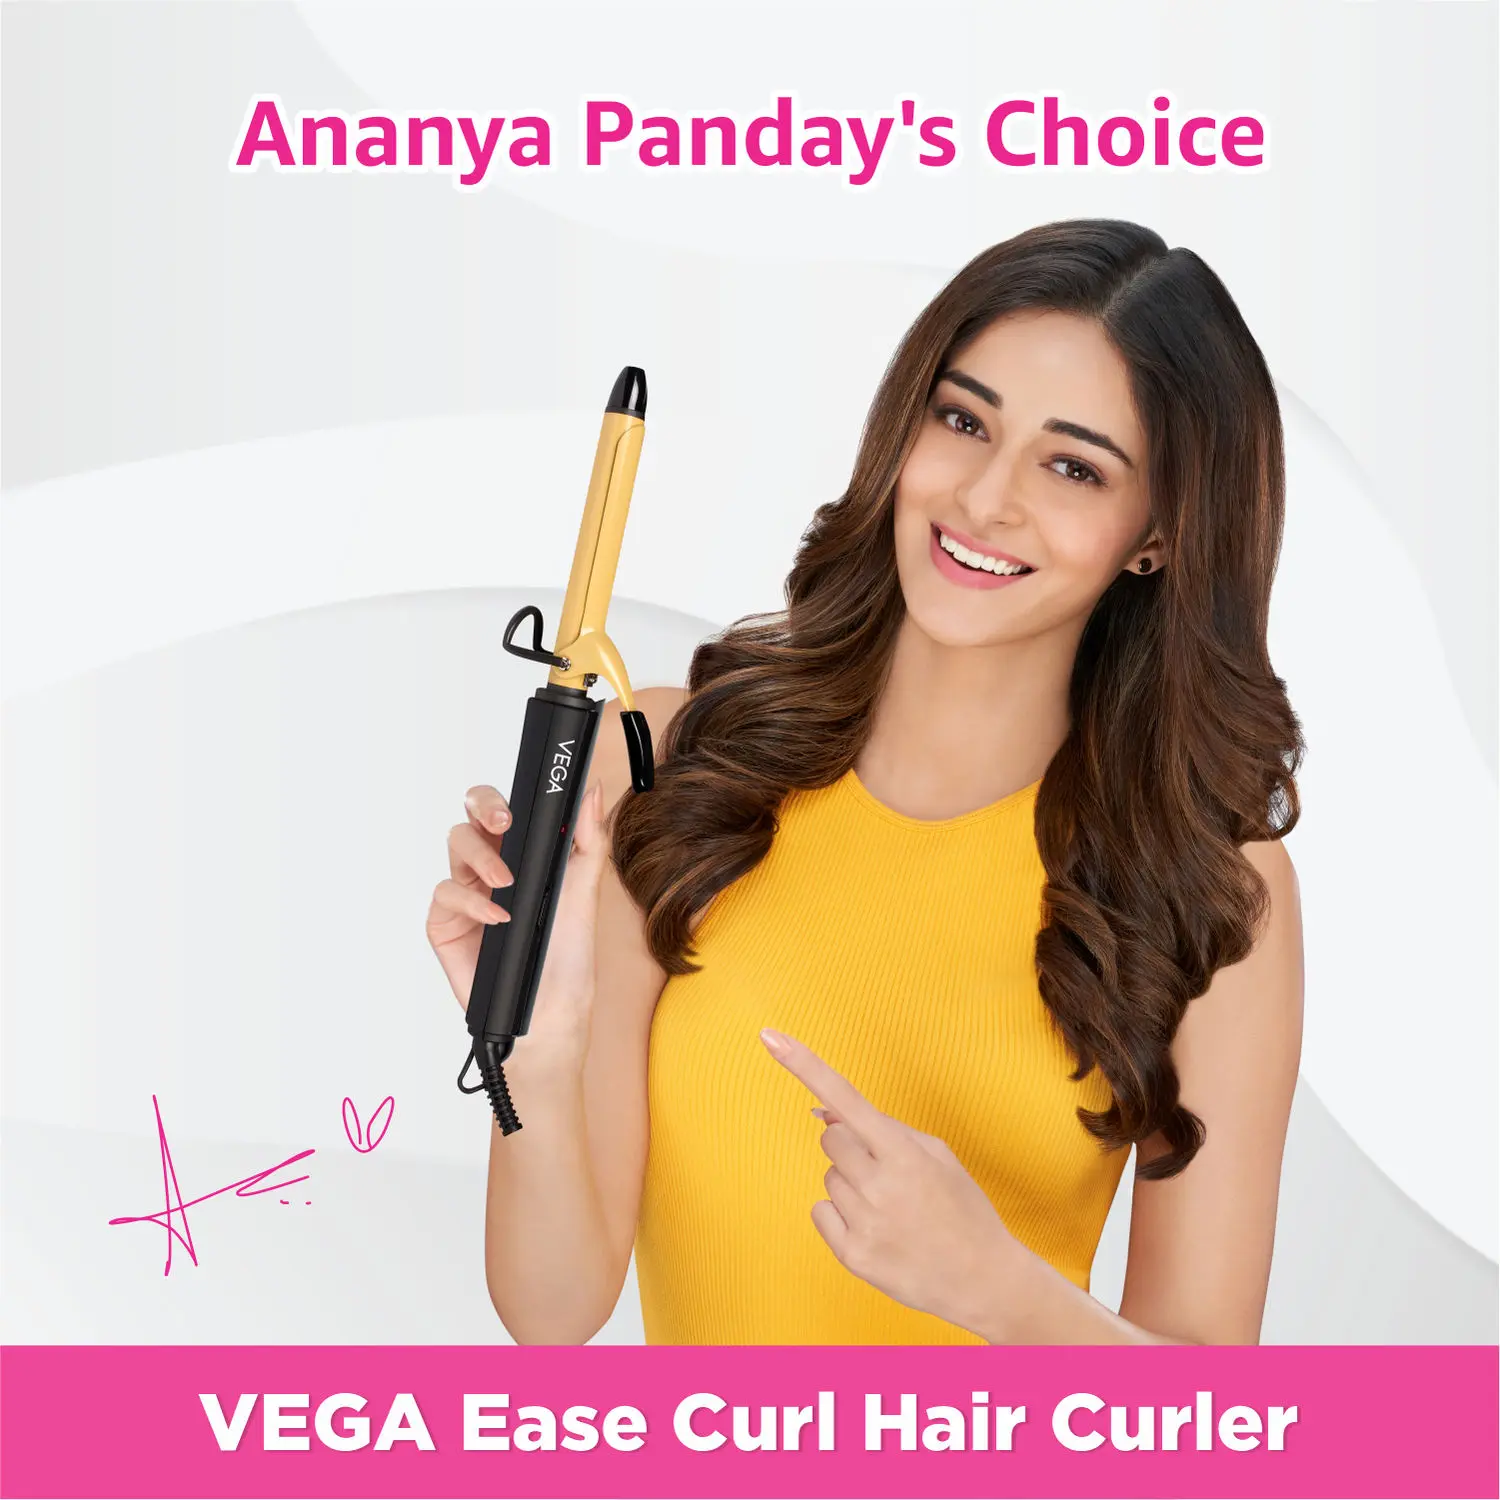 VEGA VHCH-01 Ease Curl Hair Curler, 19mm Barrel